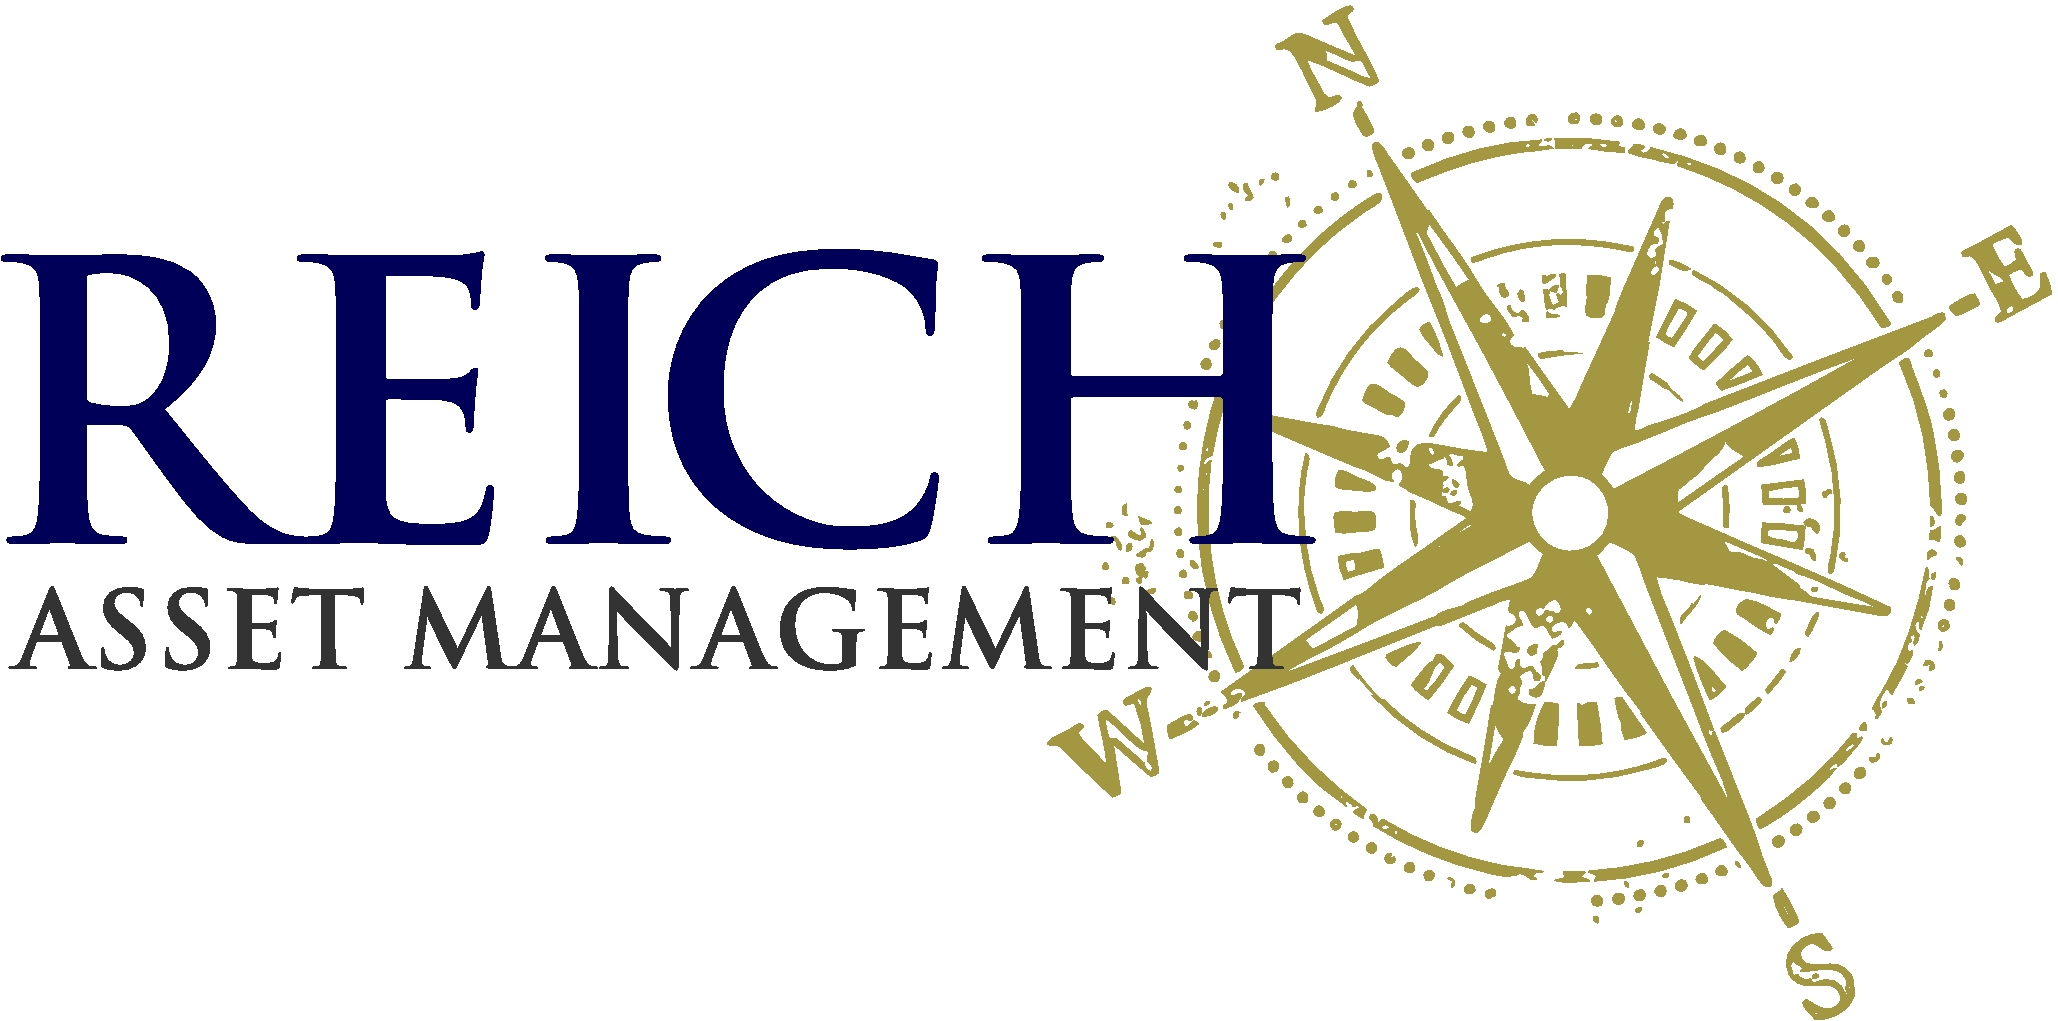 Reich Asset Management logo